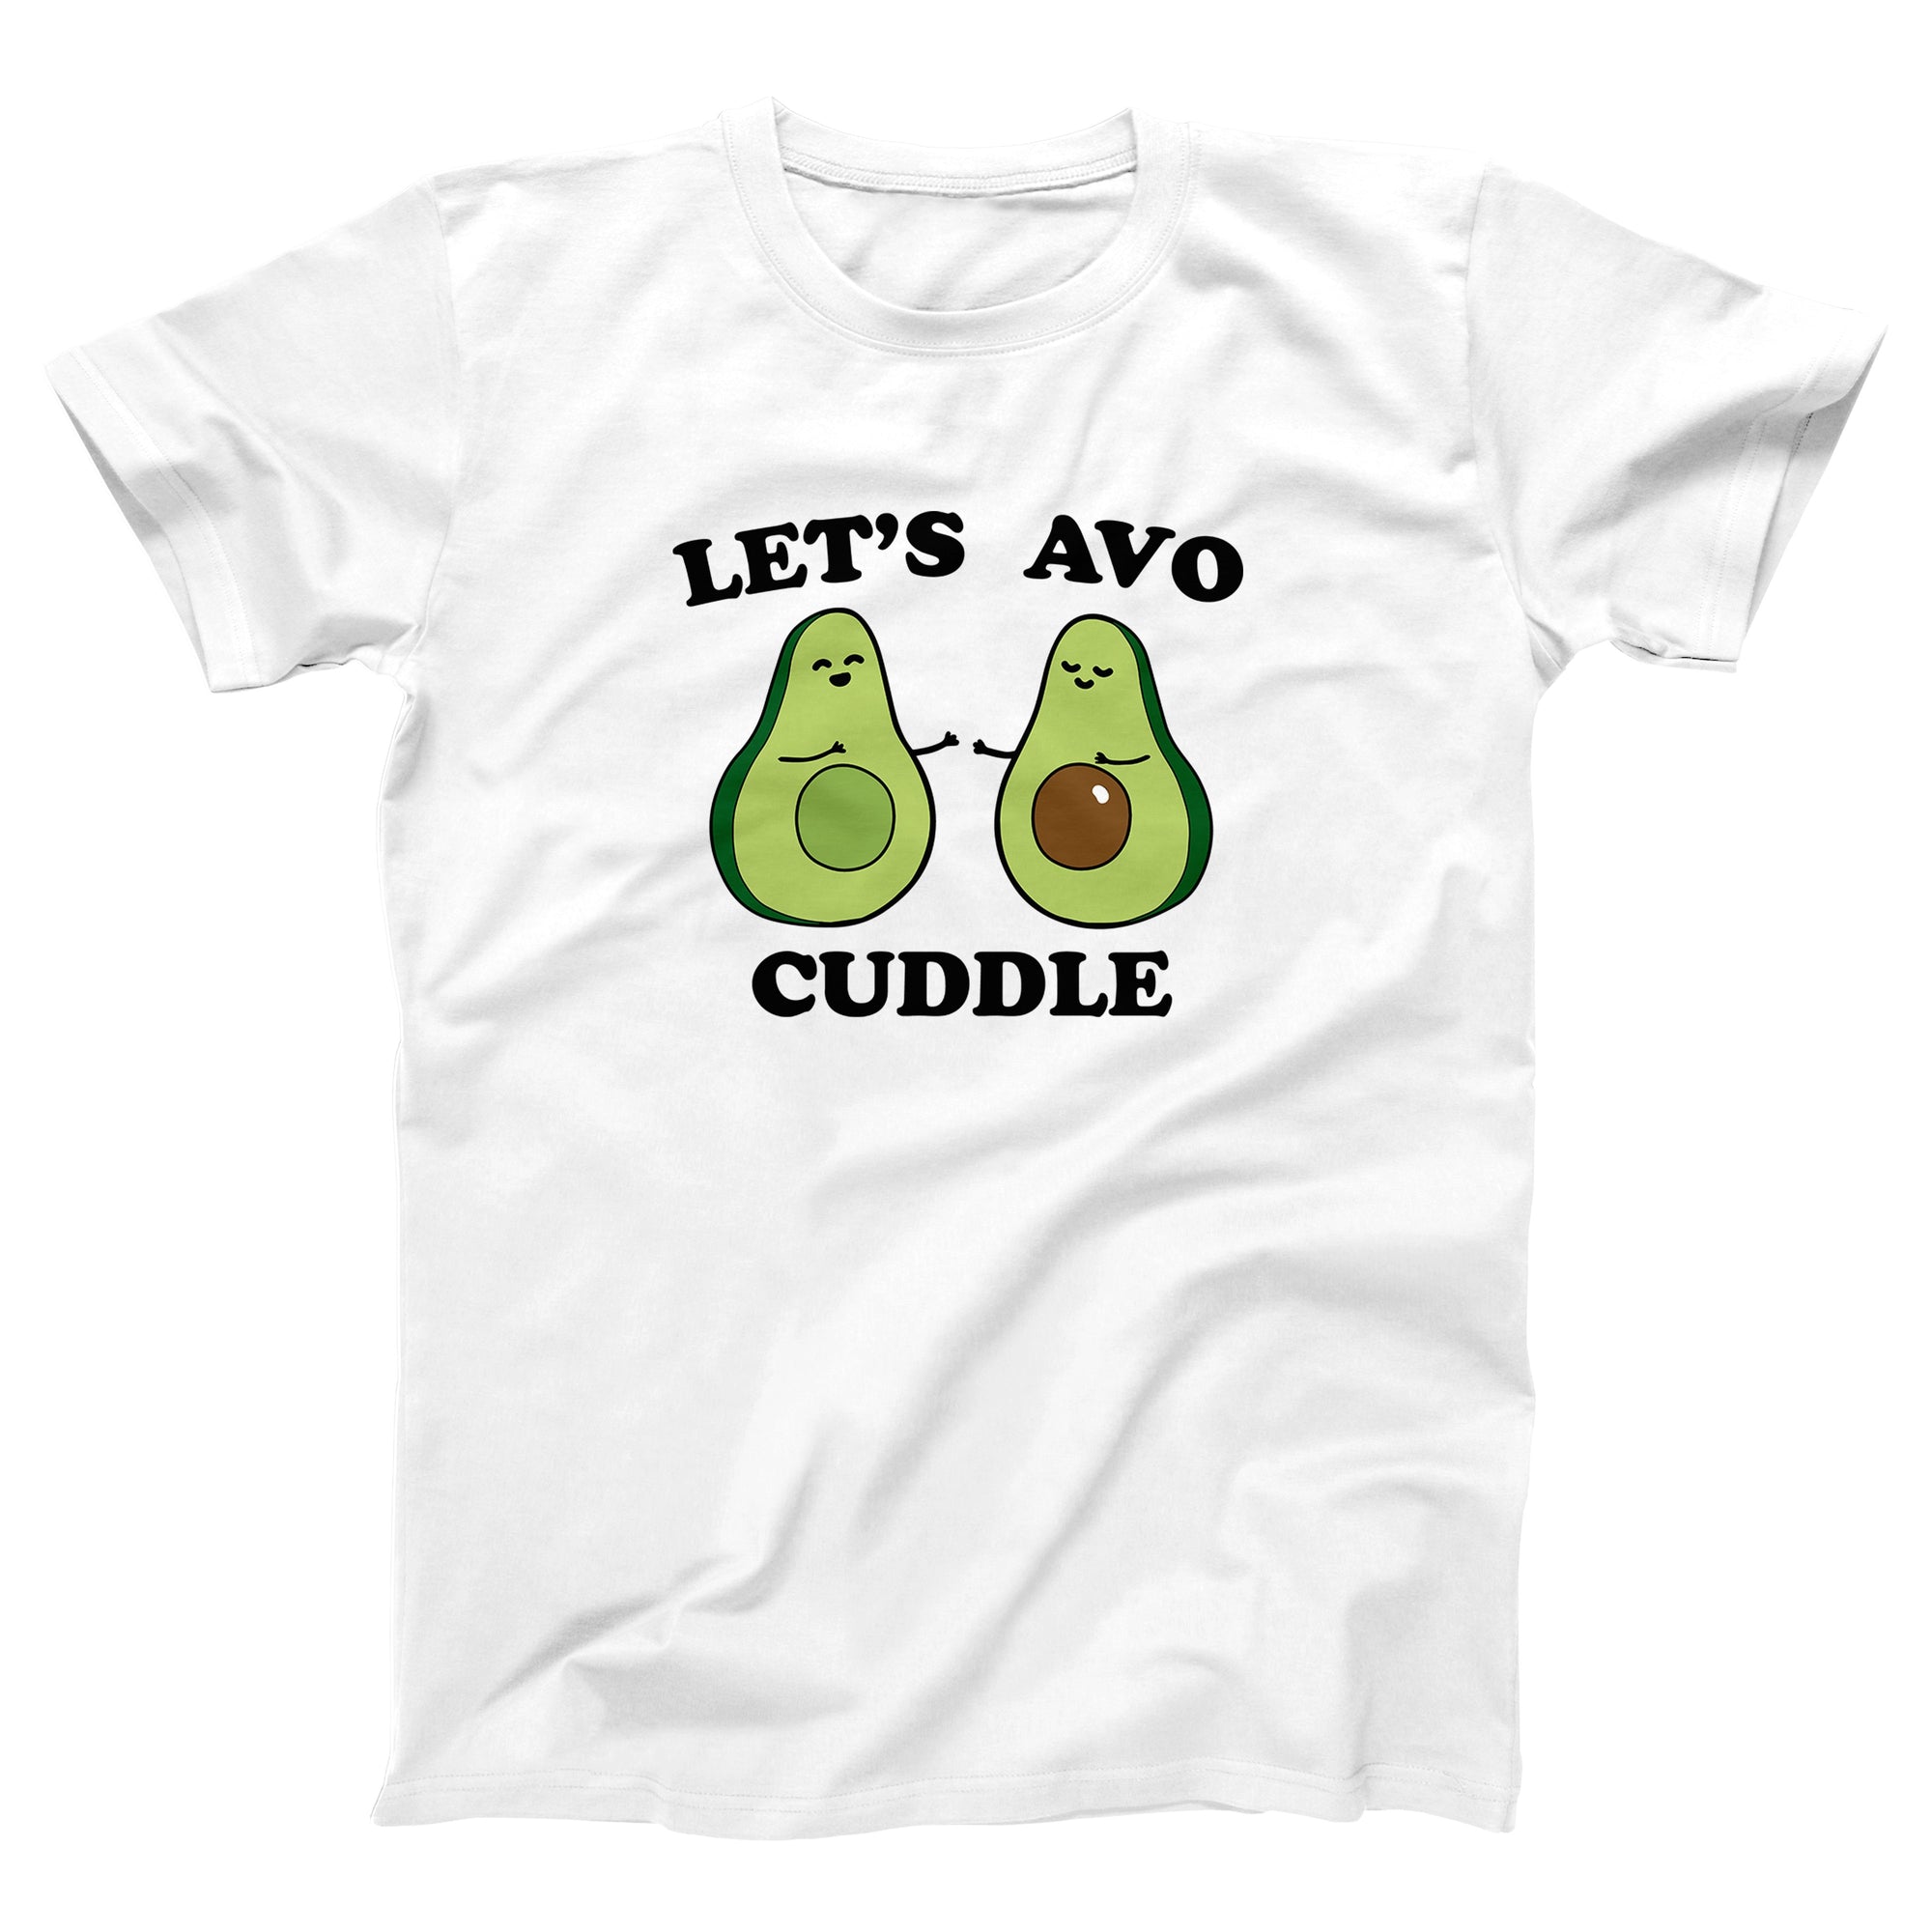 Let's Avocuddle Adult Unisex T-Shirt - anishphilip